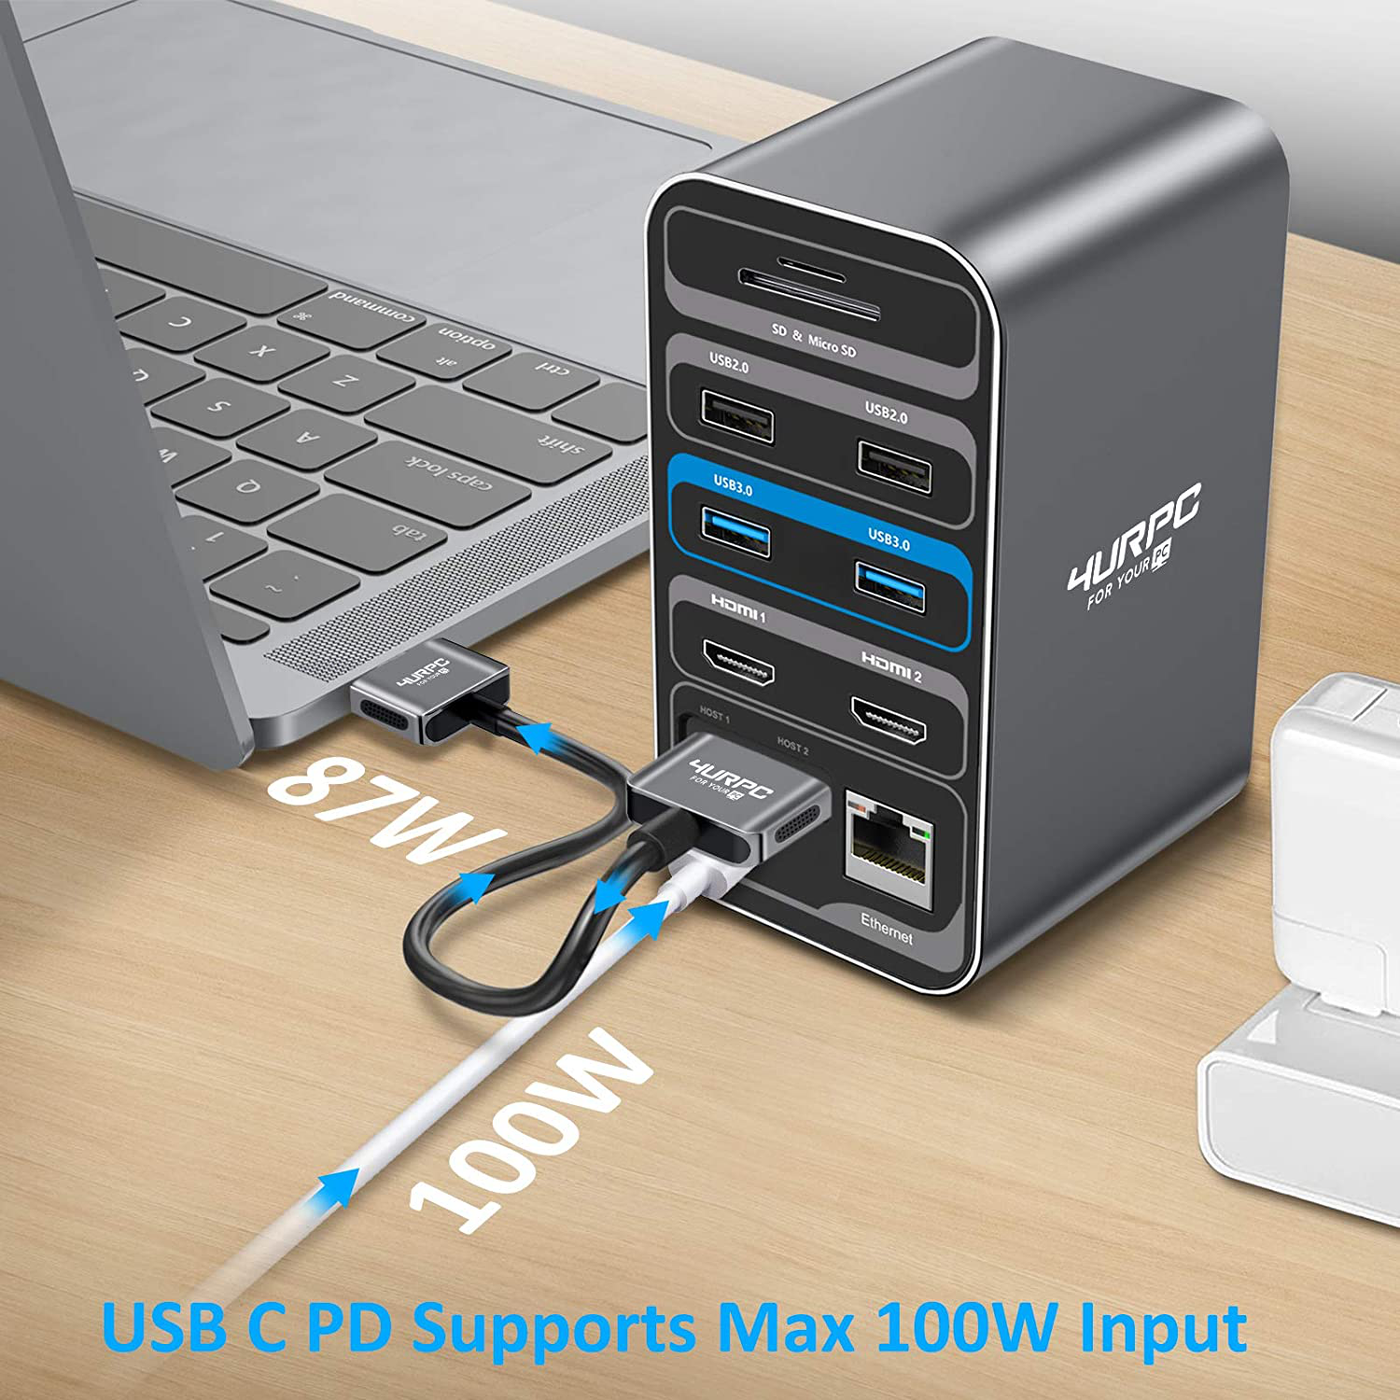 4URPC MacBook Pro Docking Station Dual Monitor HDMI 4K, 14-IN-2 USB C Triple Display Laptop Docking Station for MacBook Pro Air - 2x 4K HDMI, 6xUSB, SD TF Reader, RJ45 Ethernet, 3.5mm Audio/Mic, PD3.0